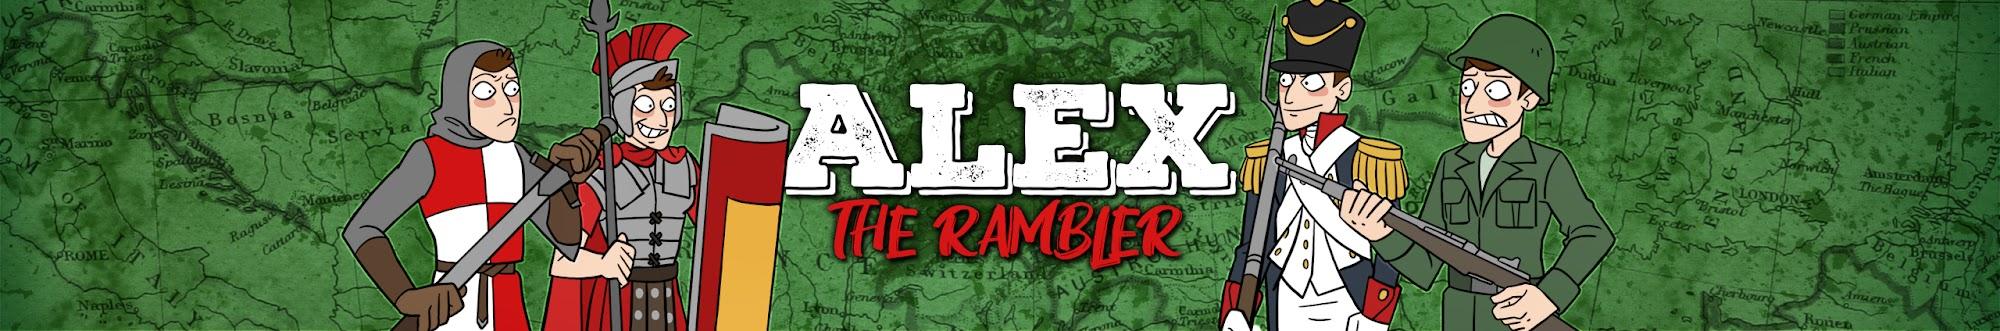 Alex The Rambler!